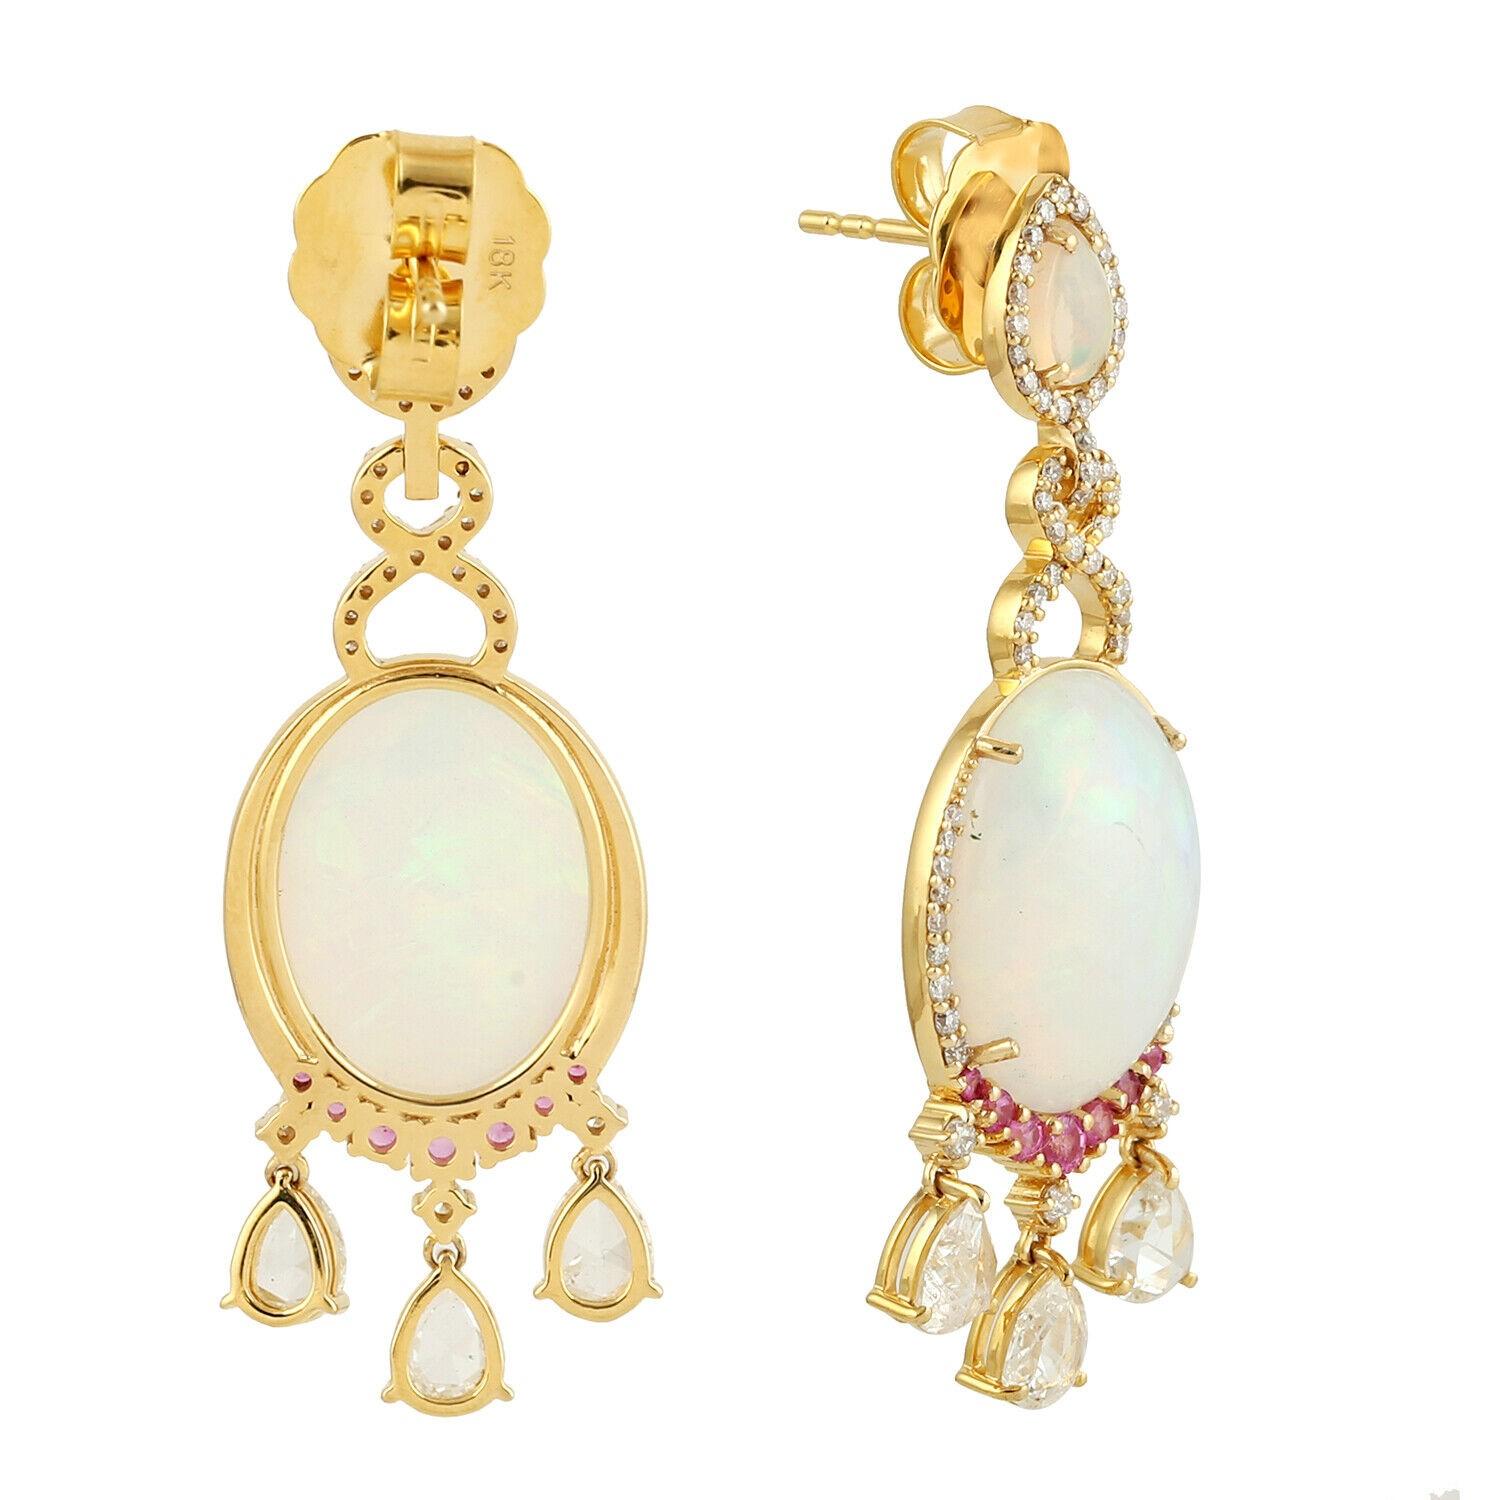 Mixed Cut Meghna Jewels 9.78 Carat Opal Diamond 14 Karat Gold Earrings For Sale